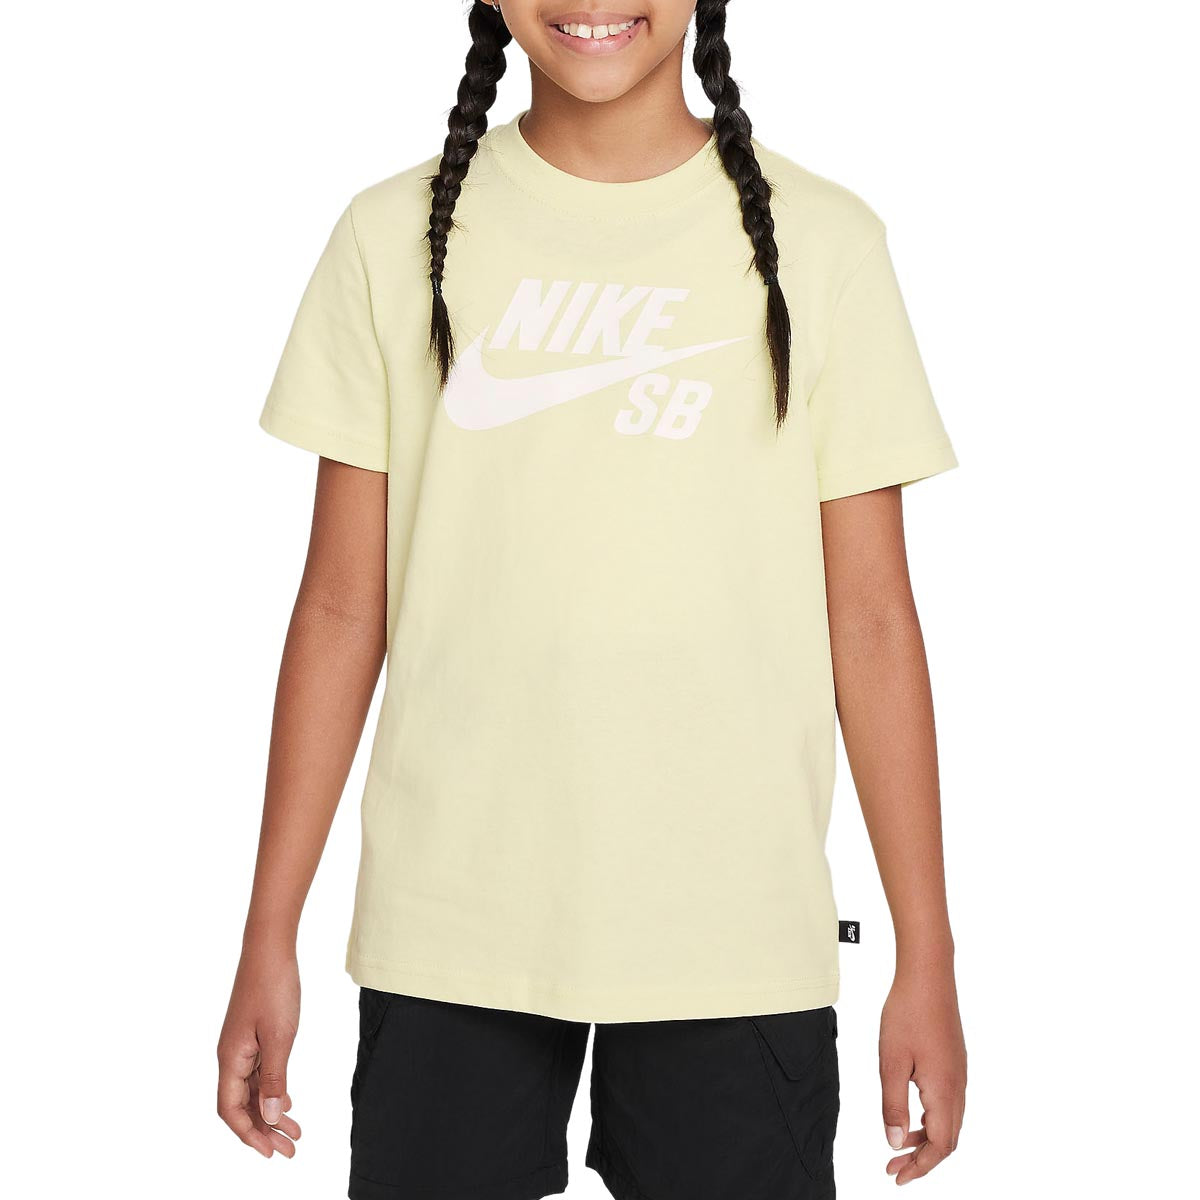 Nike SB Youth Icon T-Shirt - Luminous Green image 2